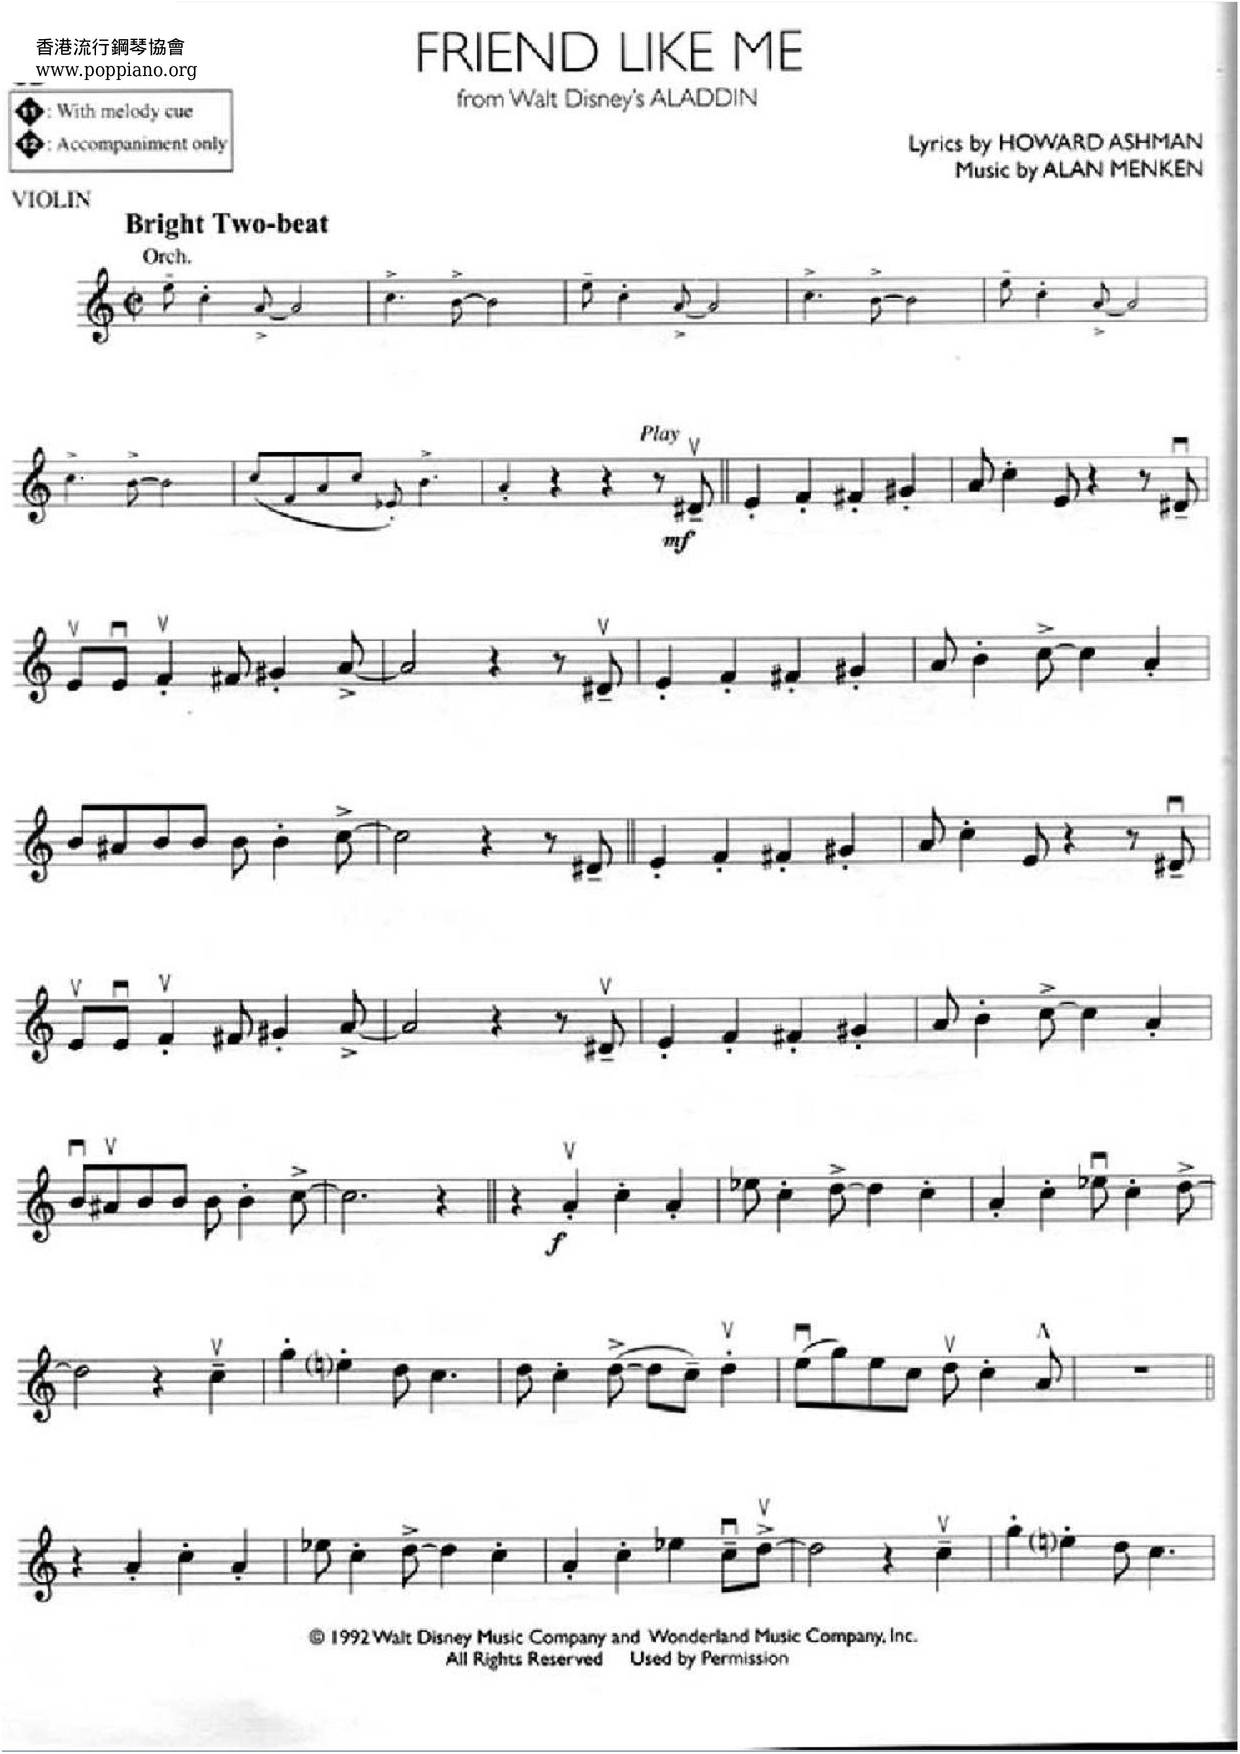 boks Genbruge symptom ☆ Movie Soundtrack-Aladdin - Friend Like Me Violin Score pdf, - Free Score  Download ☆